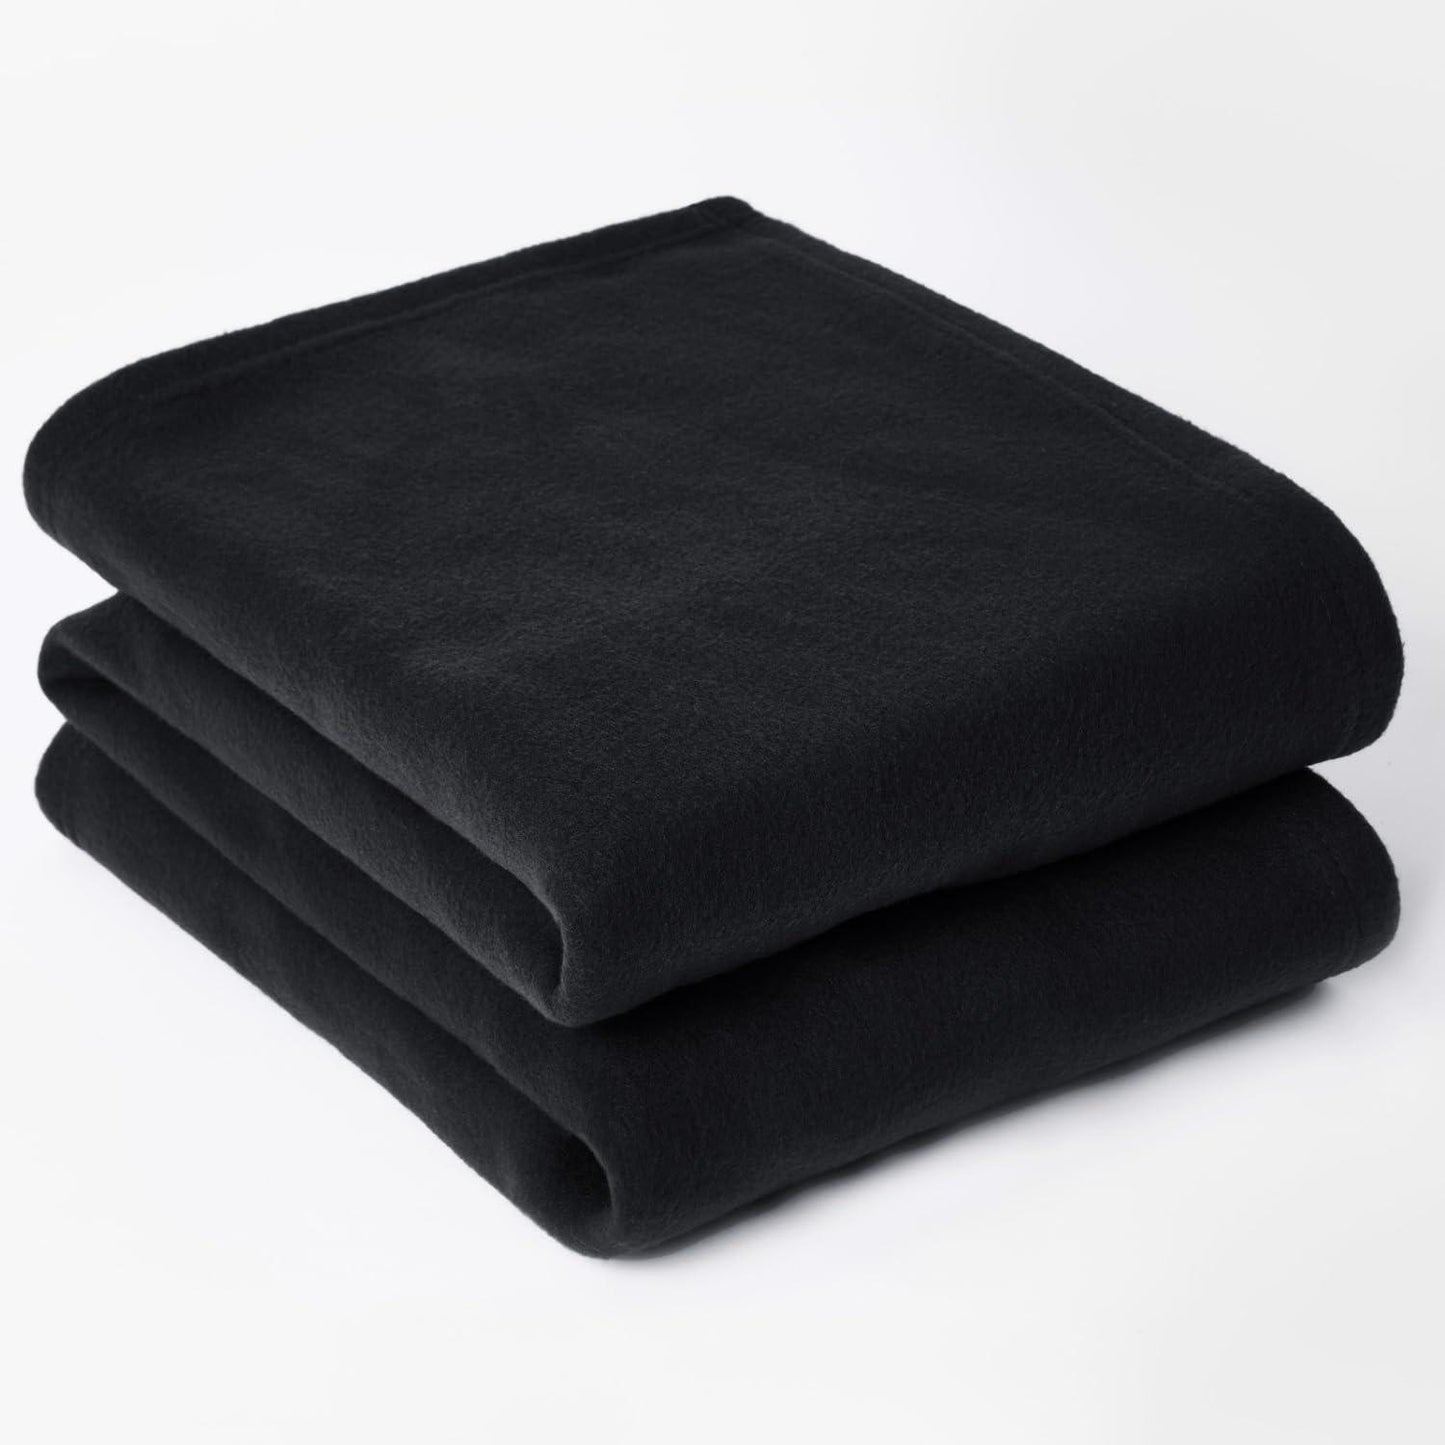 Soft Black Blanket Twin Travel Warm Polar Fleece Blanket Bed Plush for Travel Sofa Adult Kids Microfiber Throw Blanket Black Cheap 50 x60 Fleece Throw for All Season - Loomini